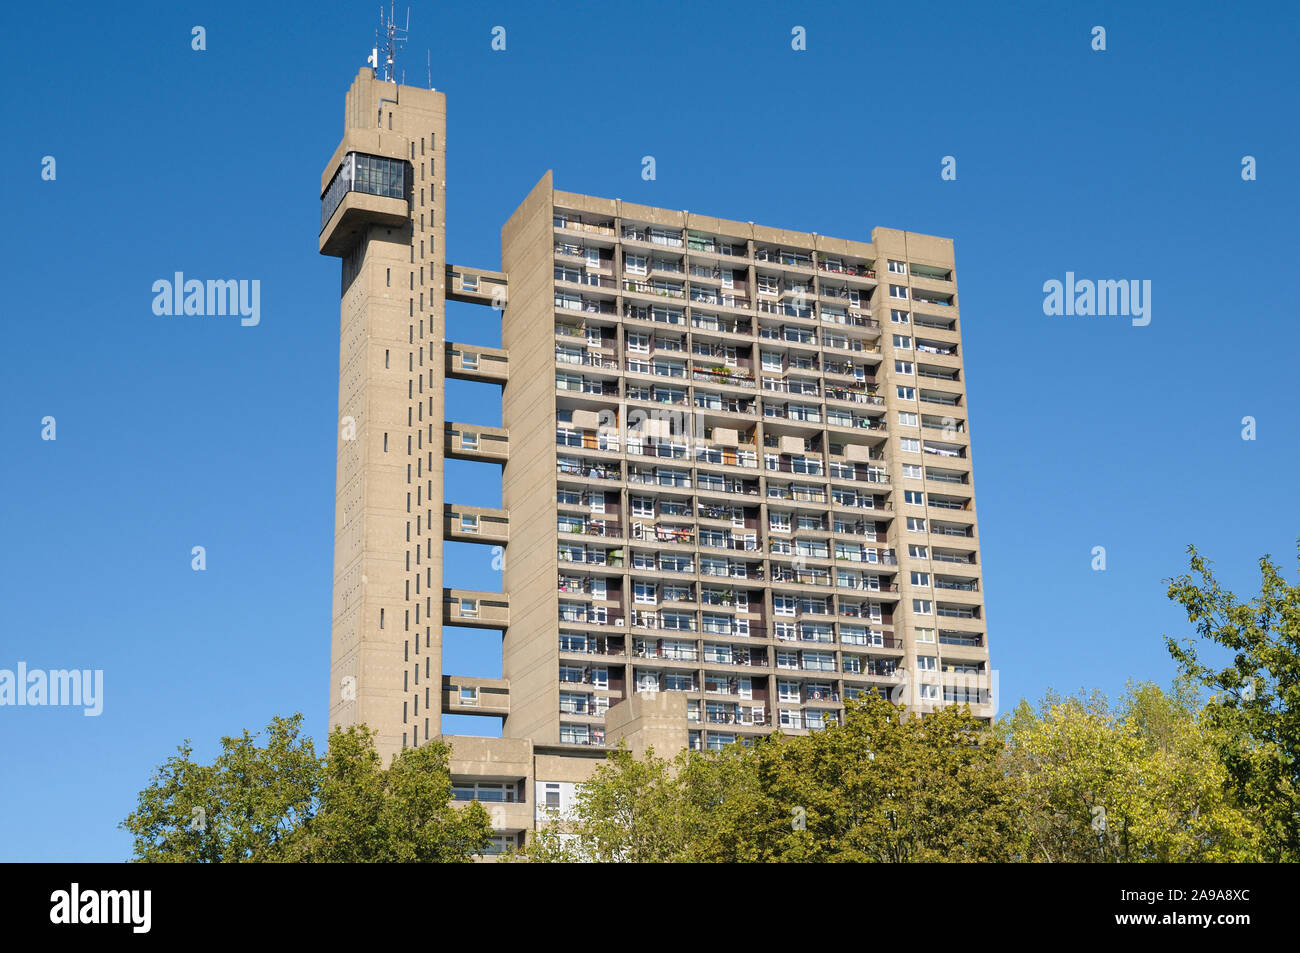 Trellick Tower, an iconic high rise Brutalist apartment block, Golborne Road, North Kensington, West London, England, UK.  Architect: Erno Goldfinger Stock Photo